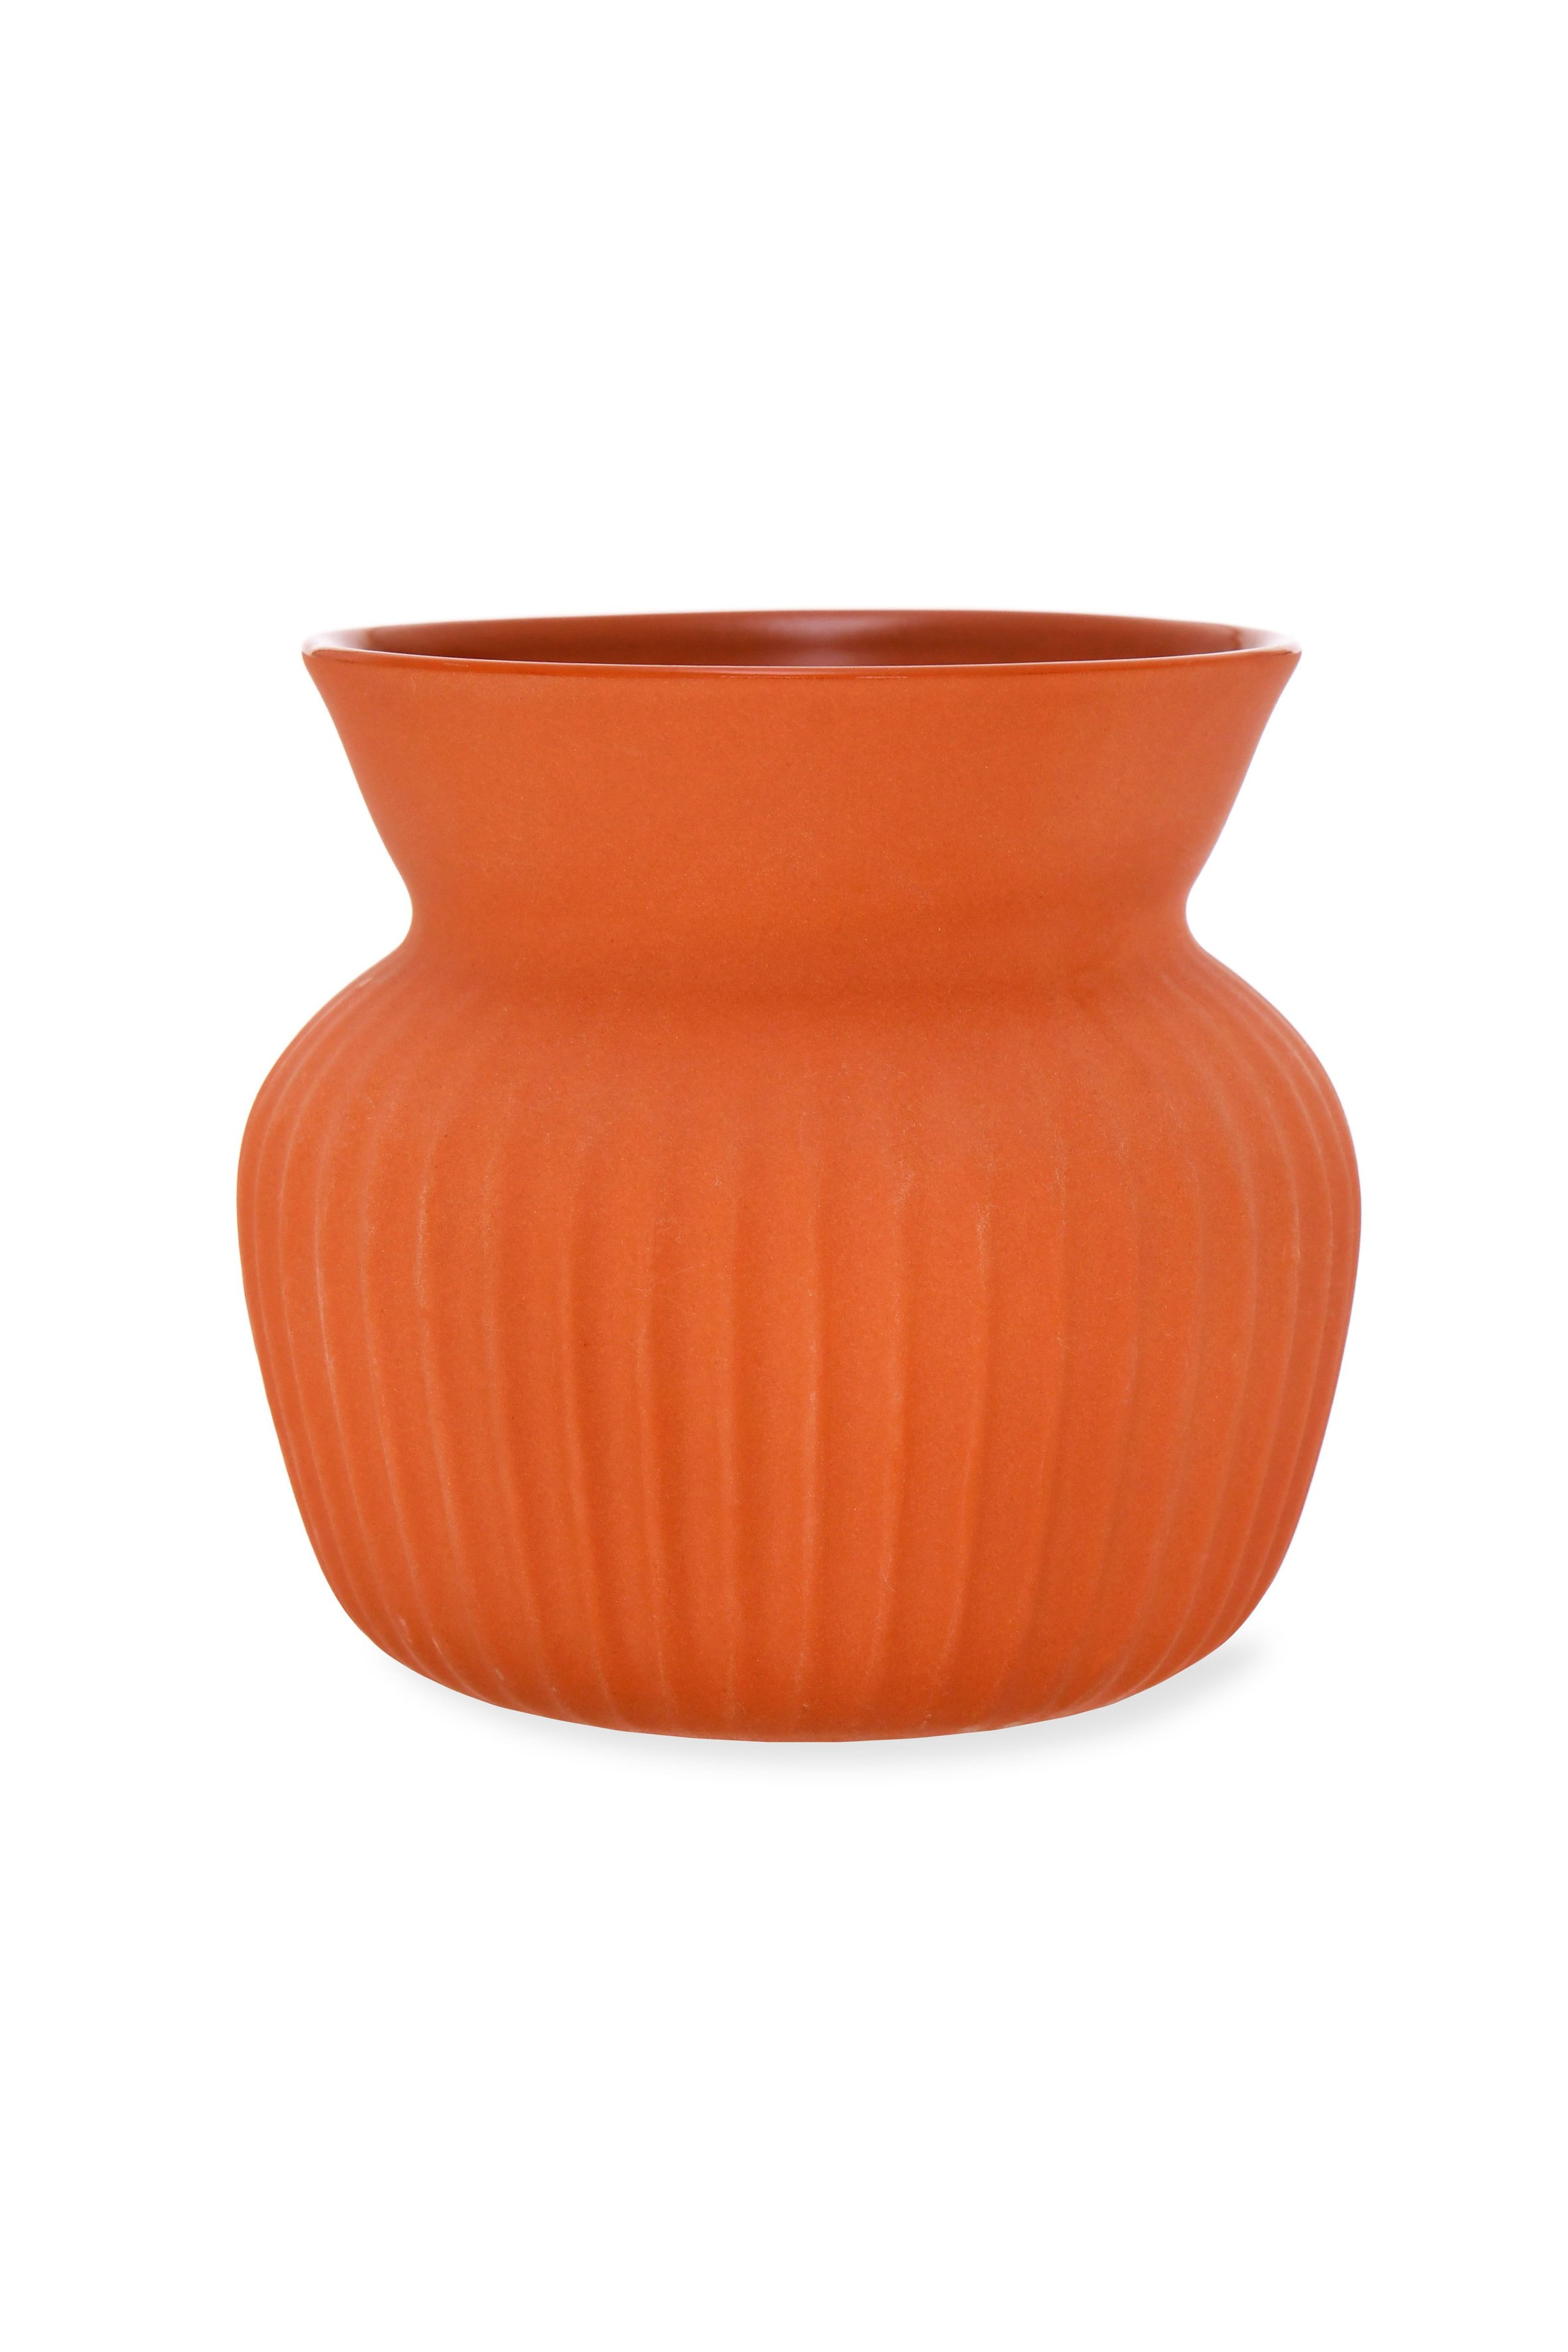 3. Garden Trading Linear Vase – 11cm, Ceramic €29, 